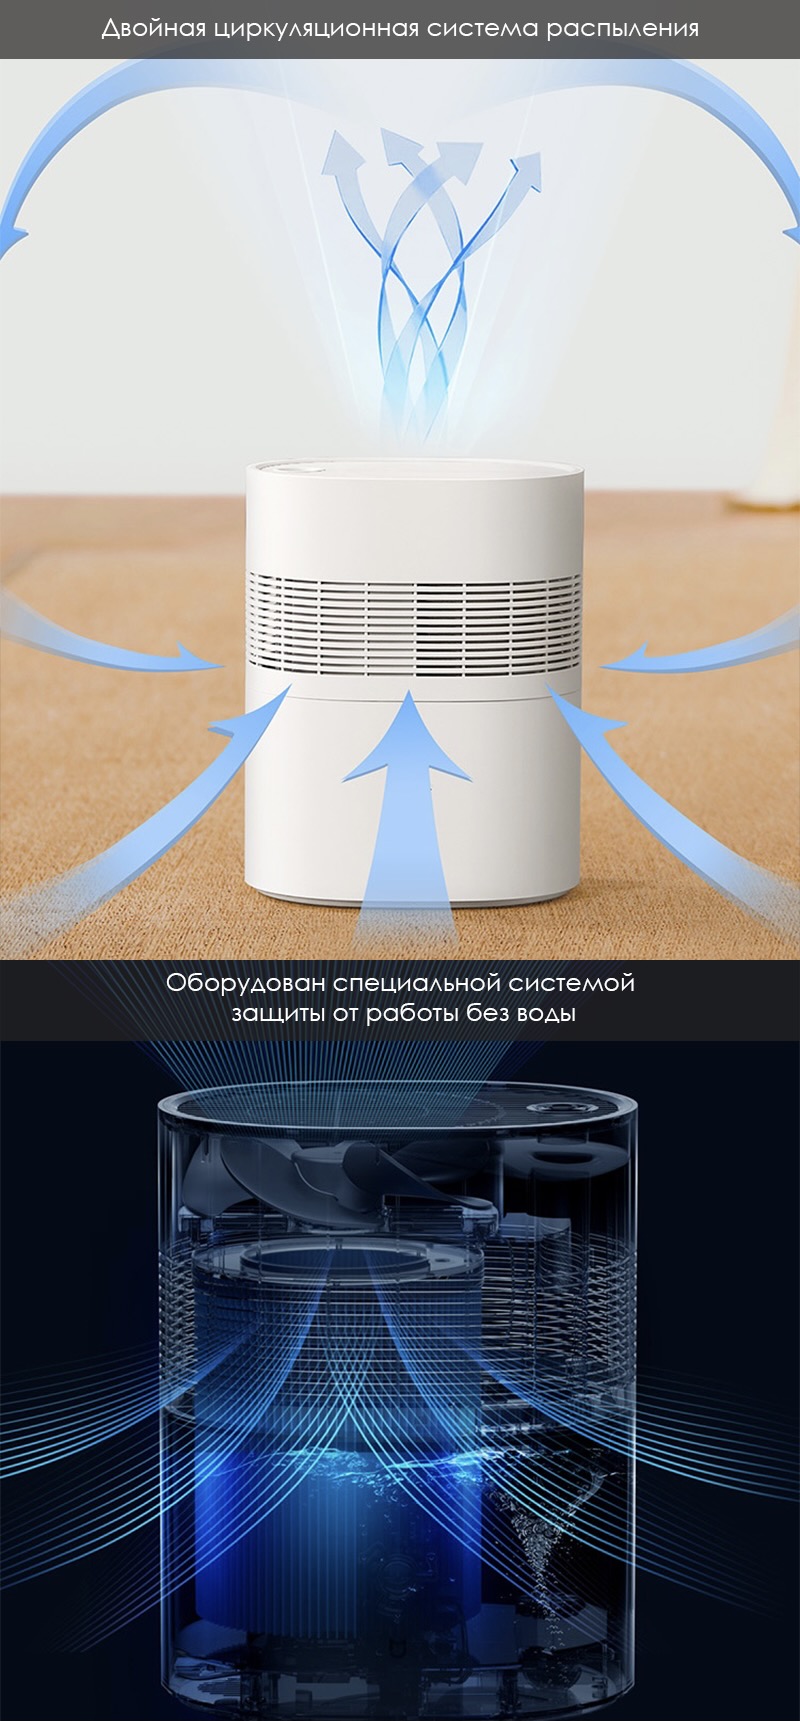 Увлажнитель воздуха Xiaomi Mijia Pure Smart Humidifier 